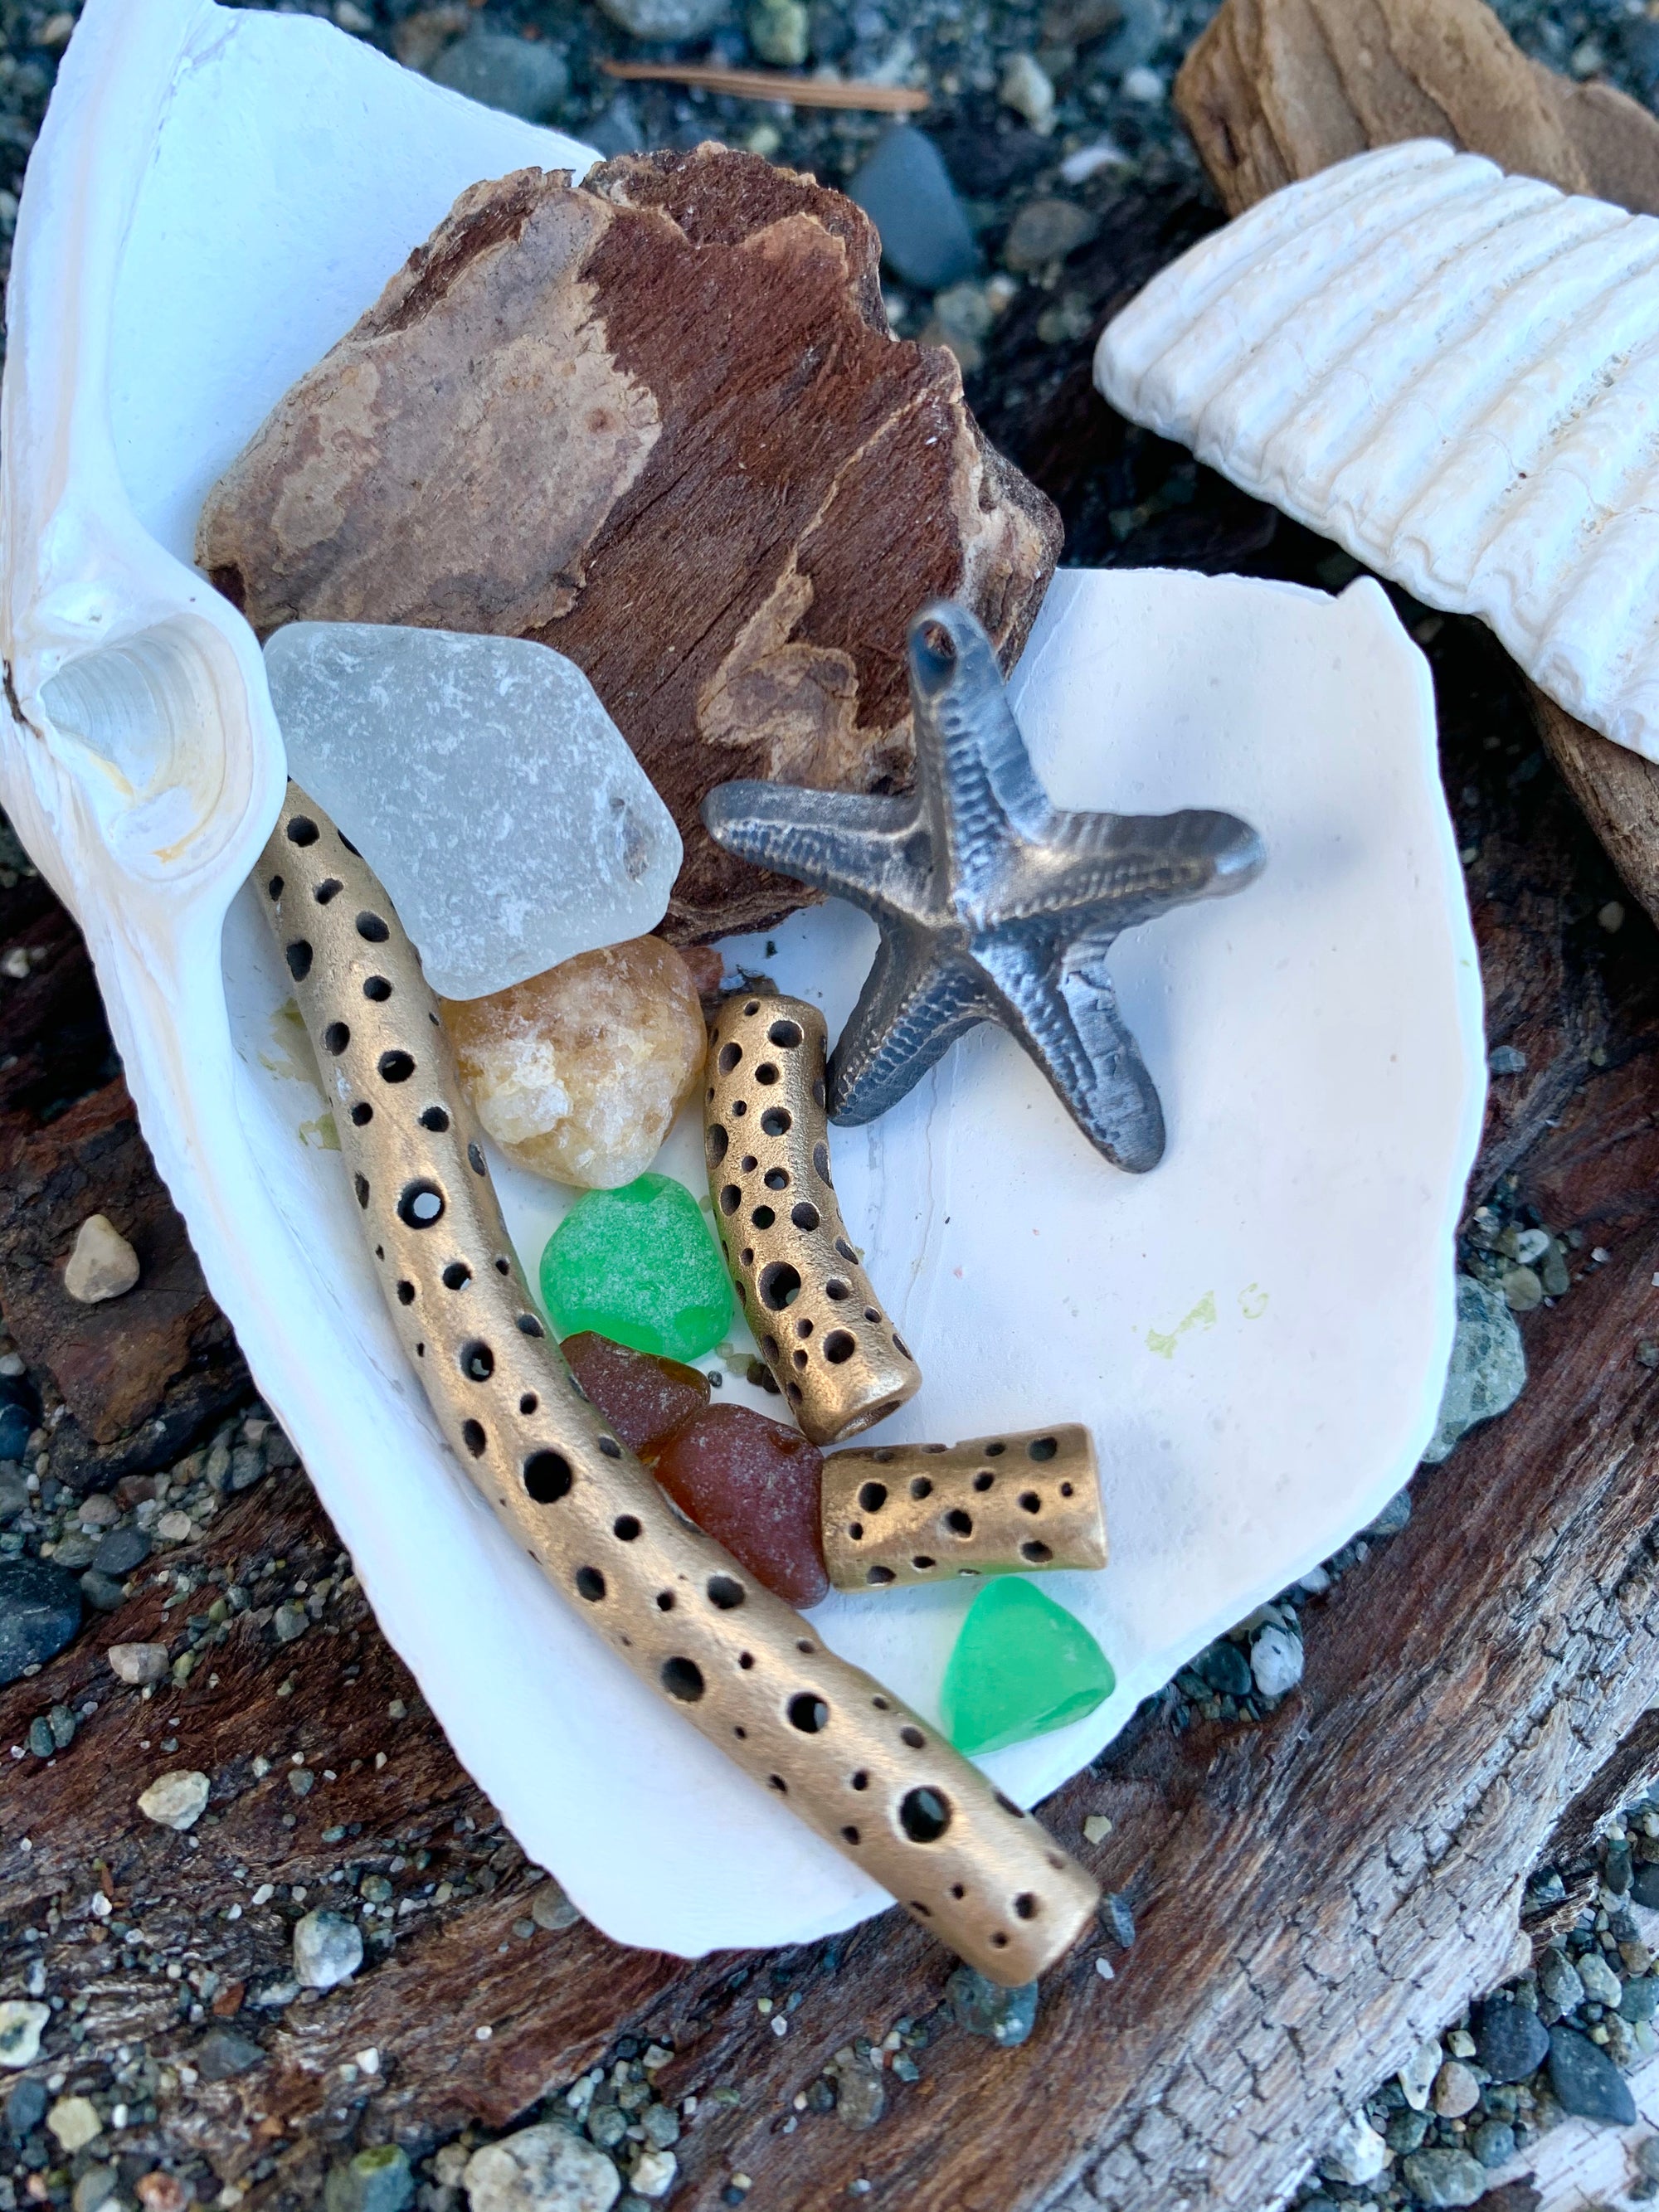 Beach combing treasure of shells and sea glass